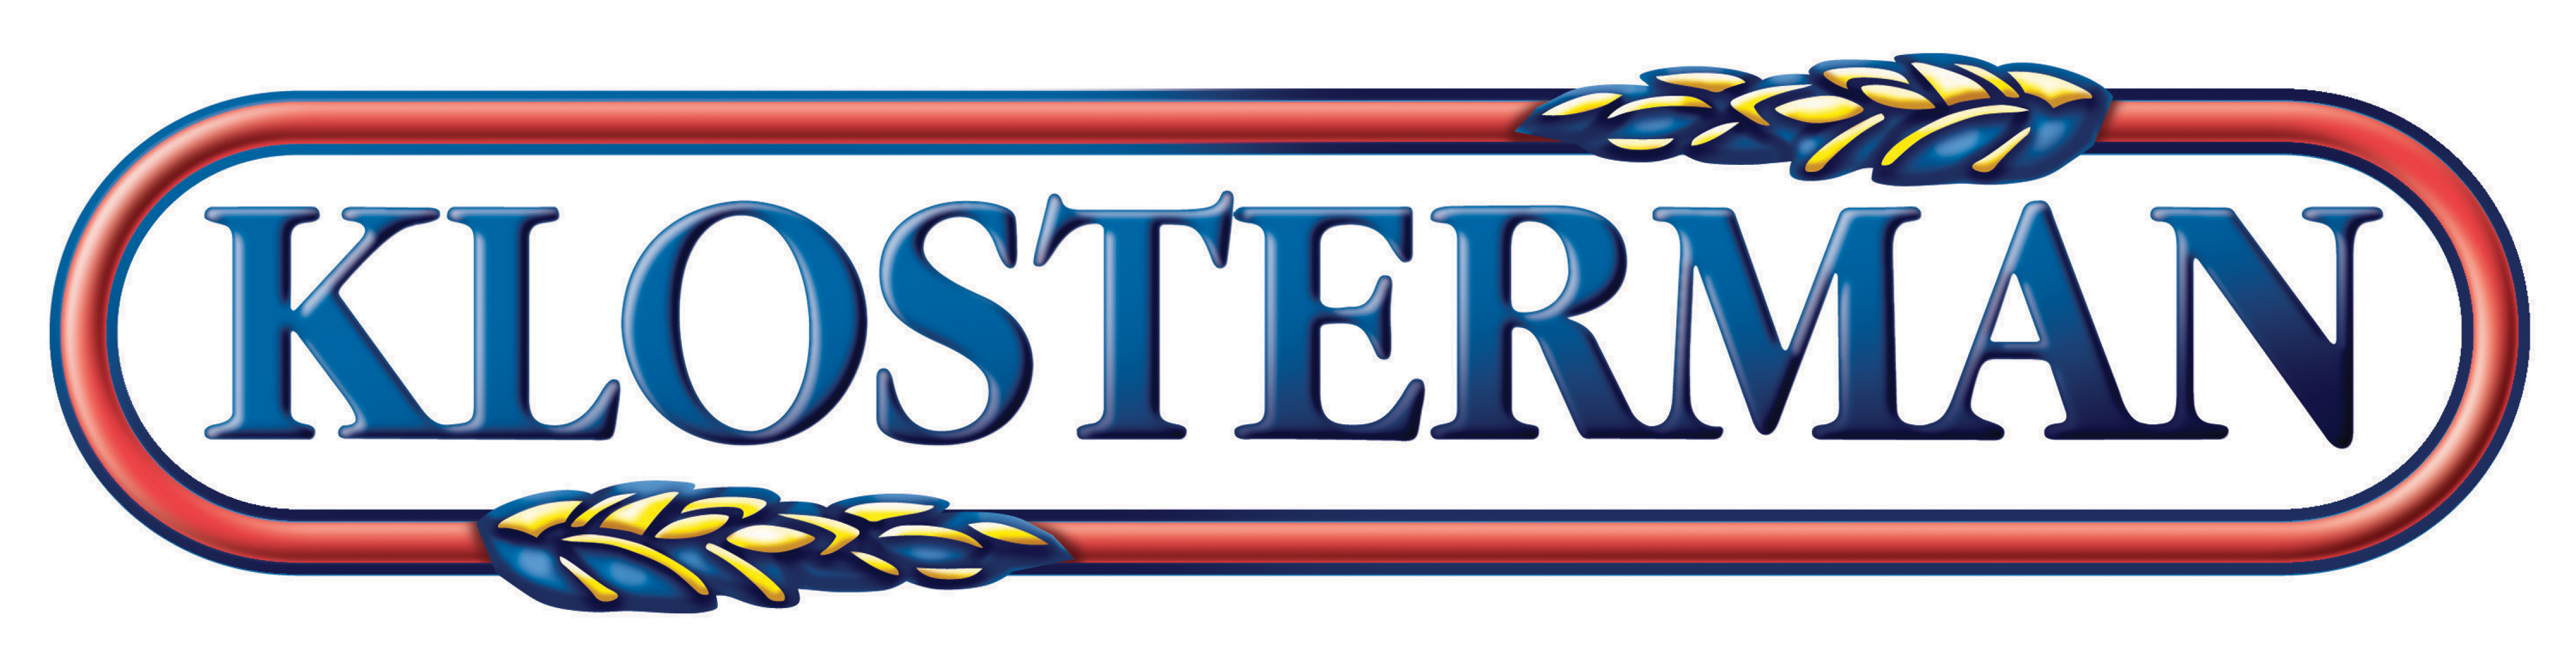 Klosterman 3D Logo